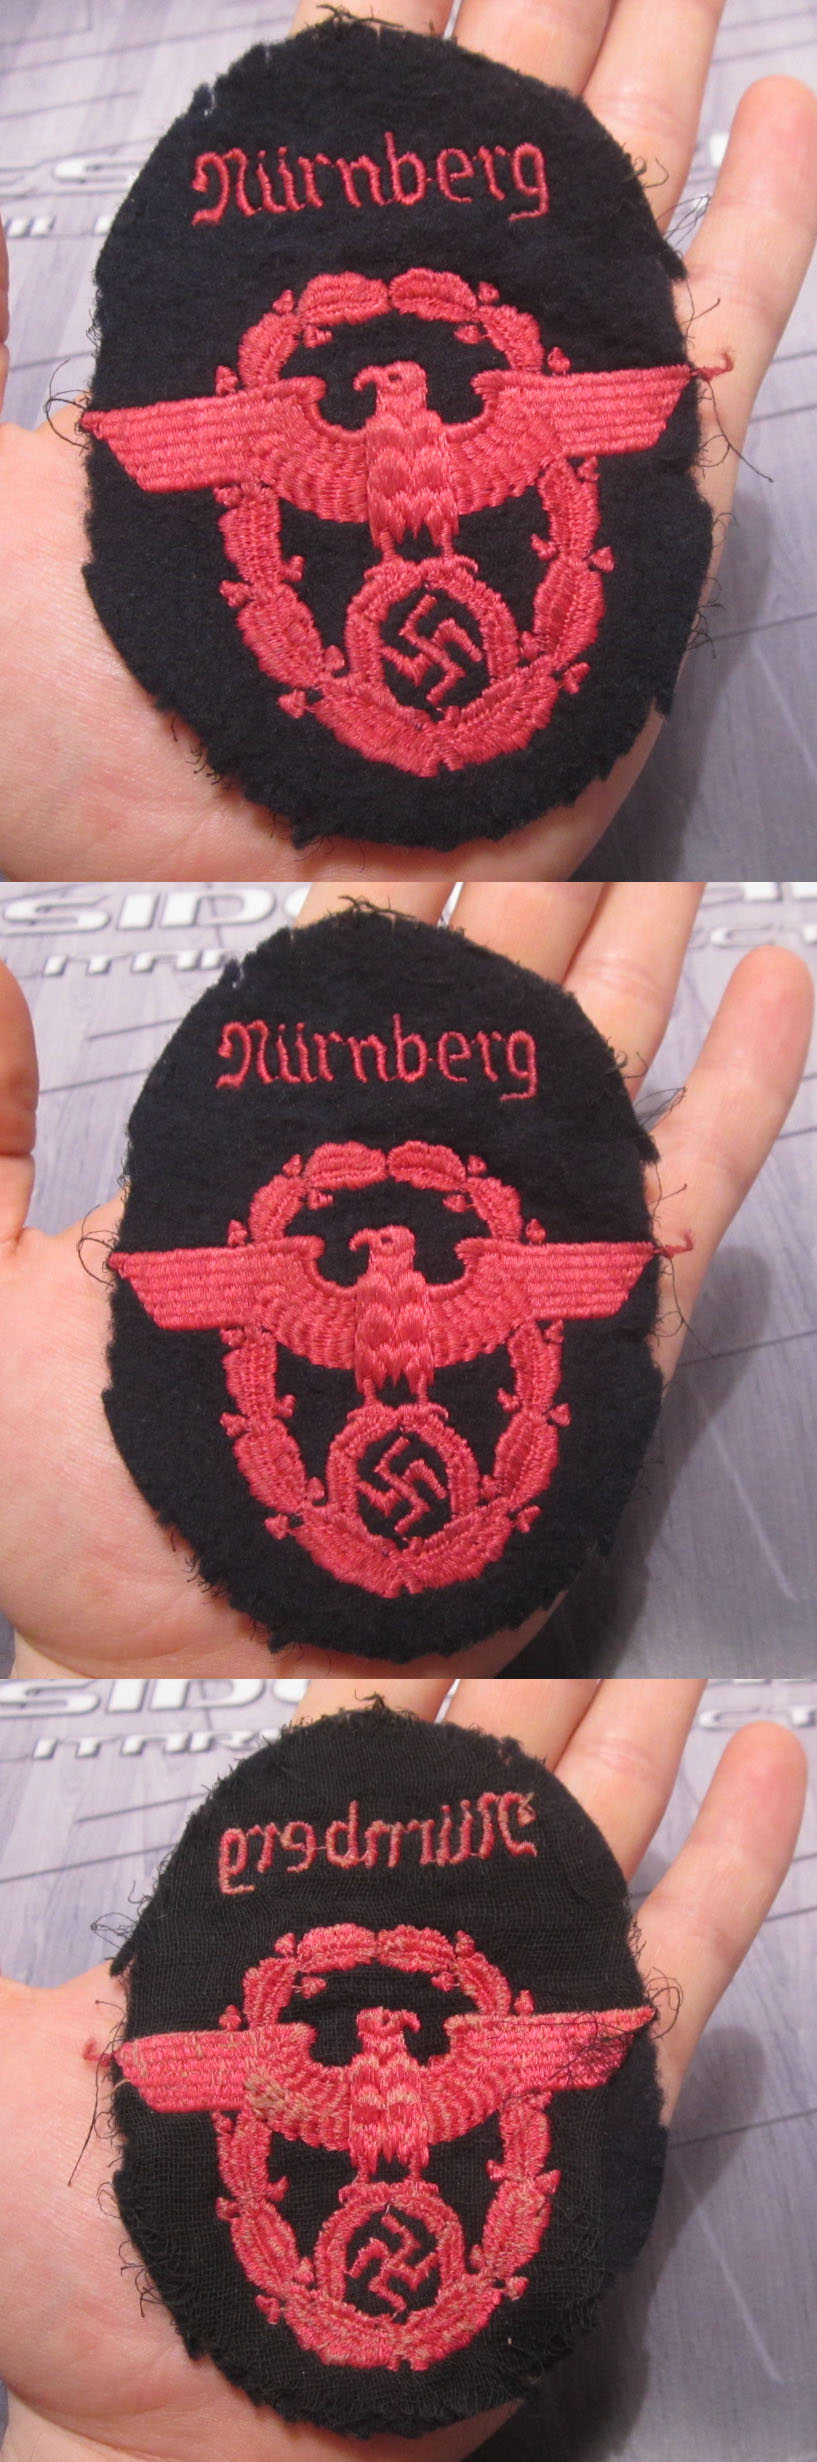 Nurnberg NCO Fireman's Eagle